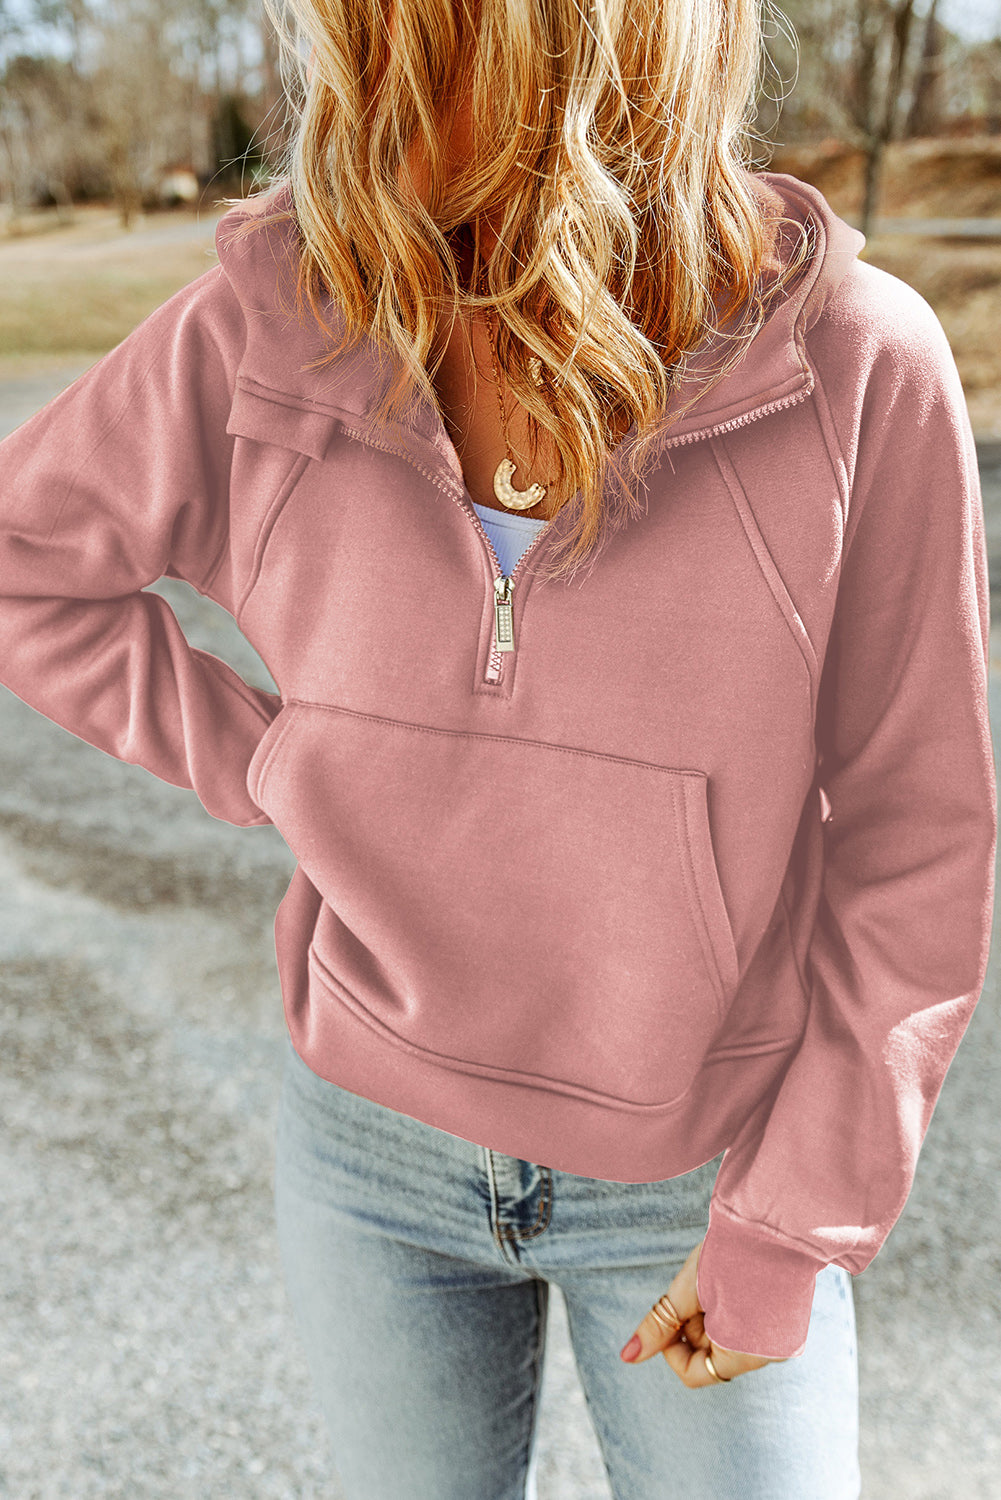 Women's Half-Zip Thumbhole Sleeve Hoodie with Kangaroo Pocket Blush Pink